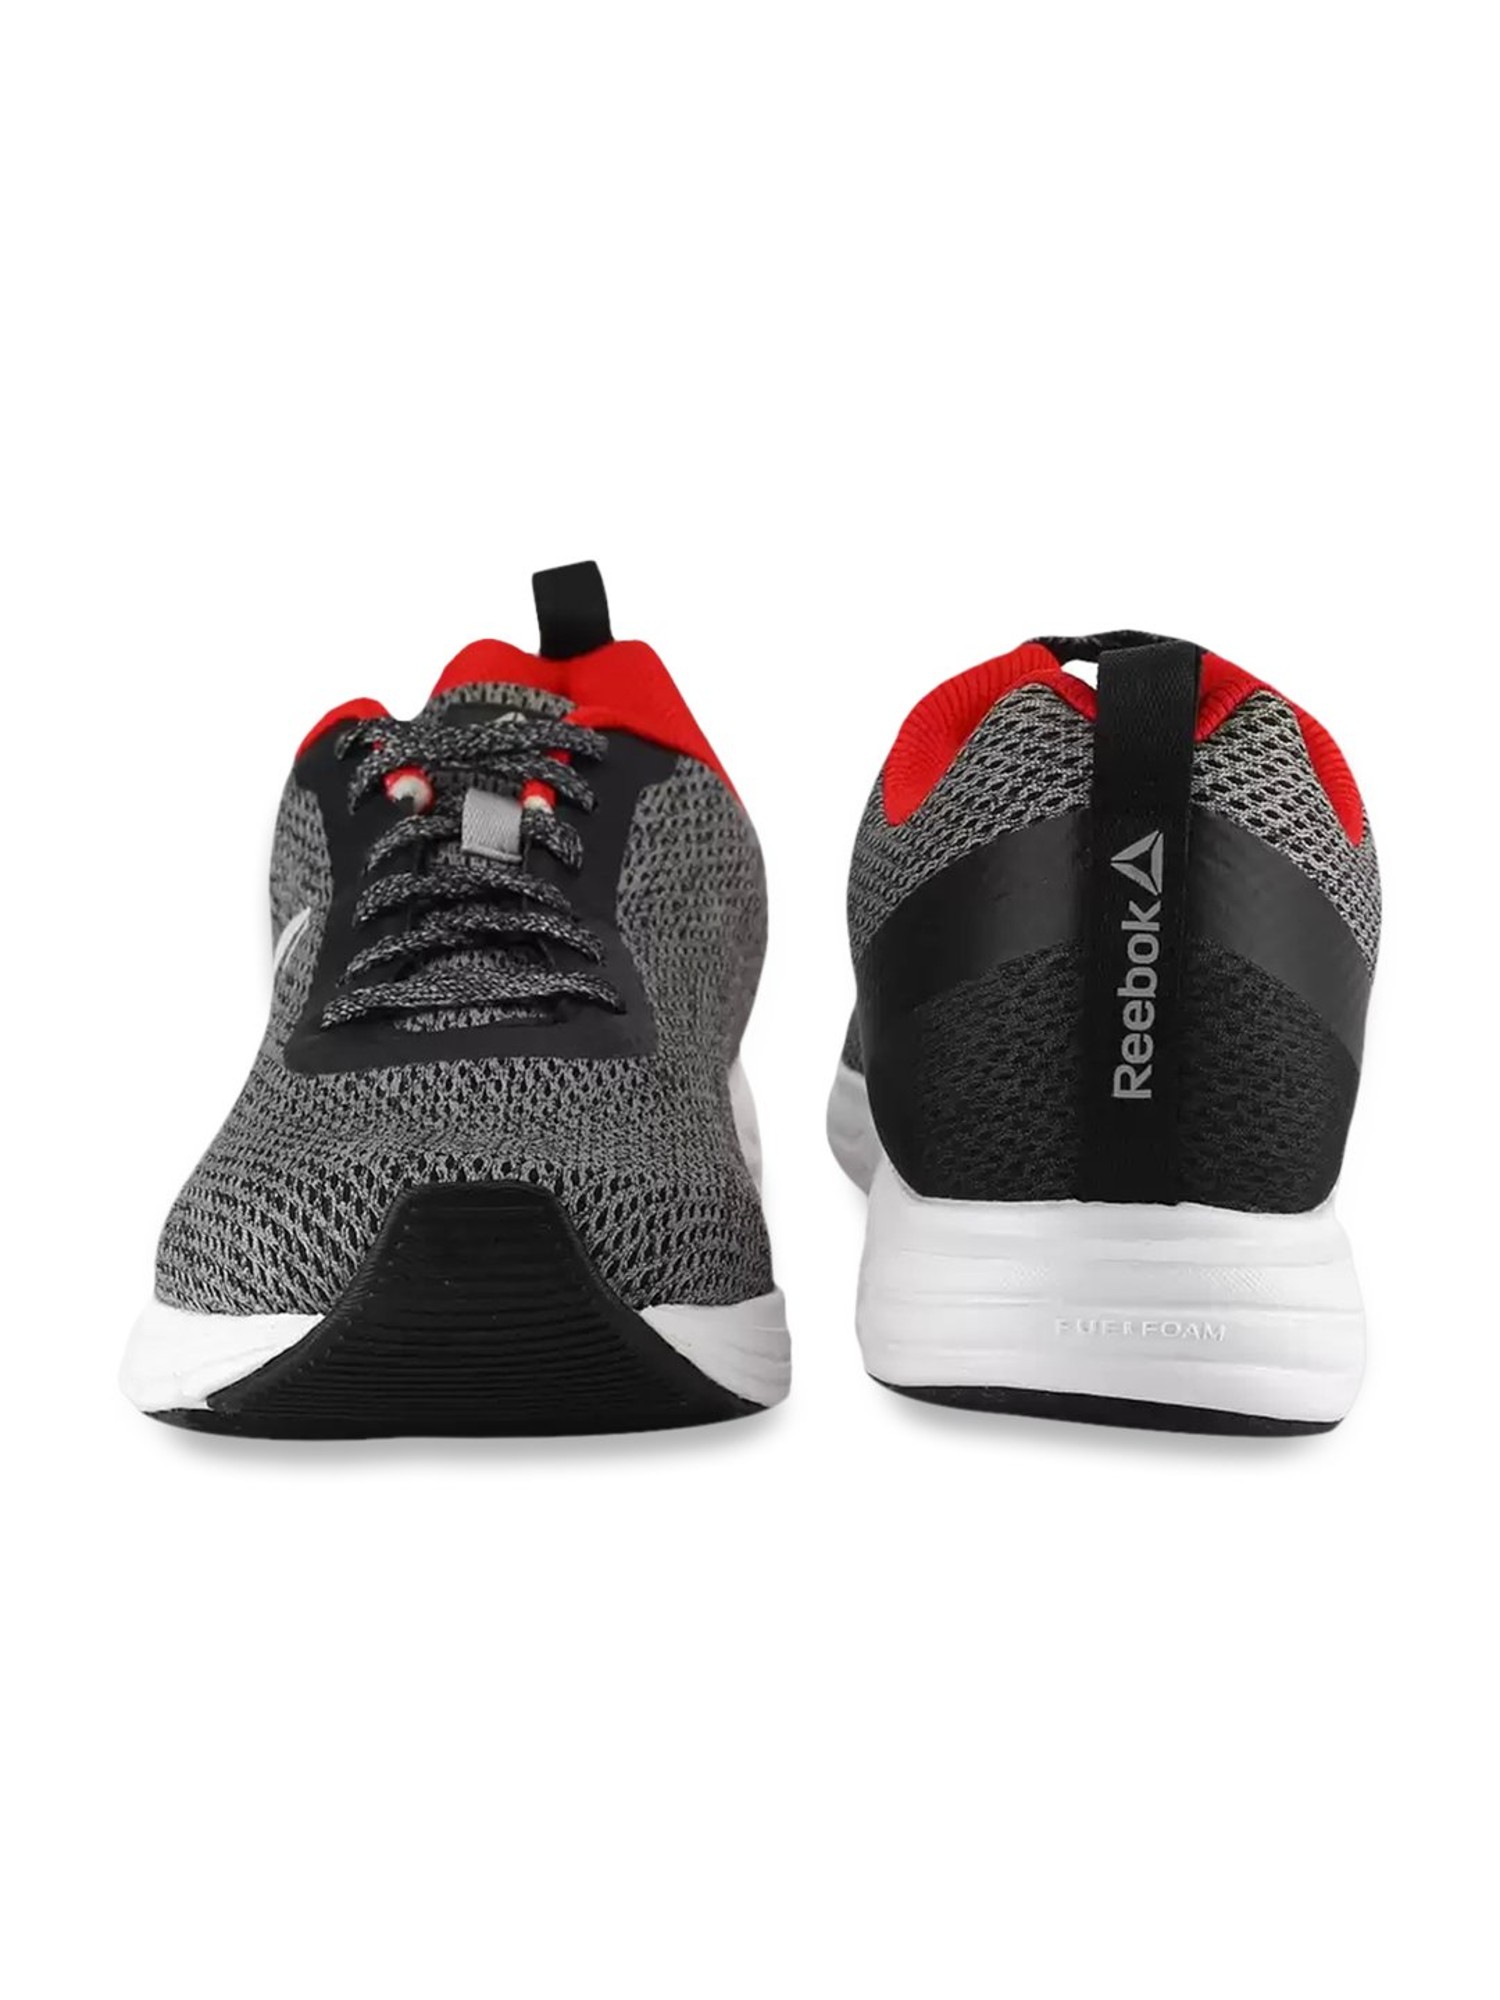 Reebok Zoom Runner Grey Running Shoes 